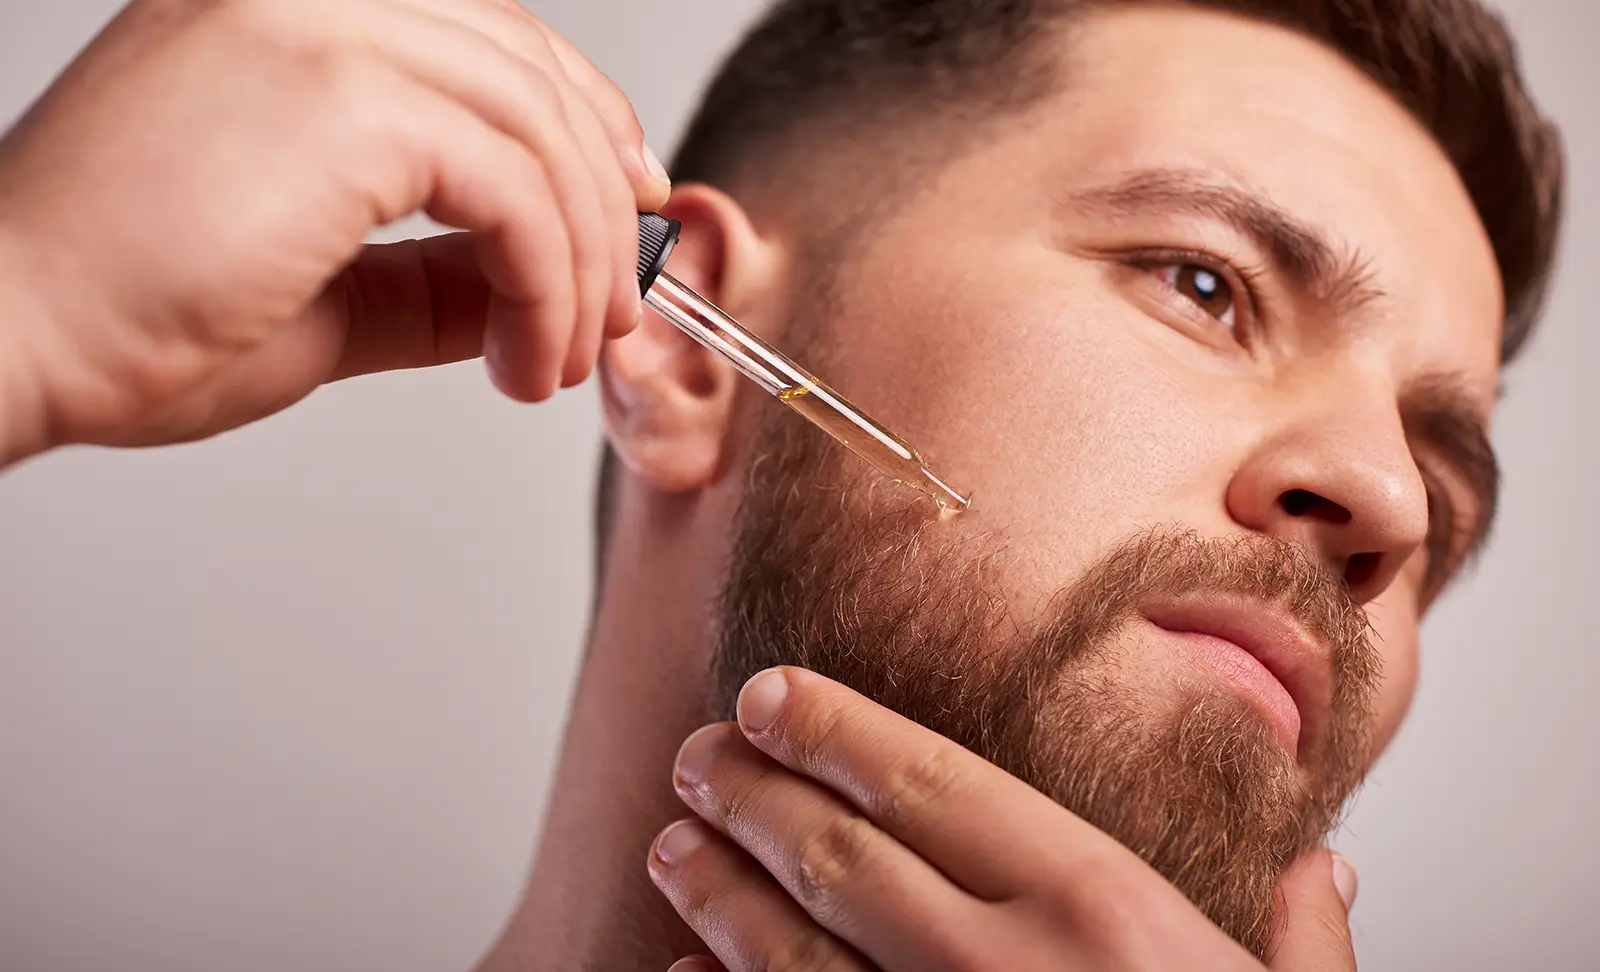 Beard oils for hair loss